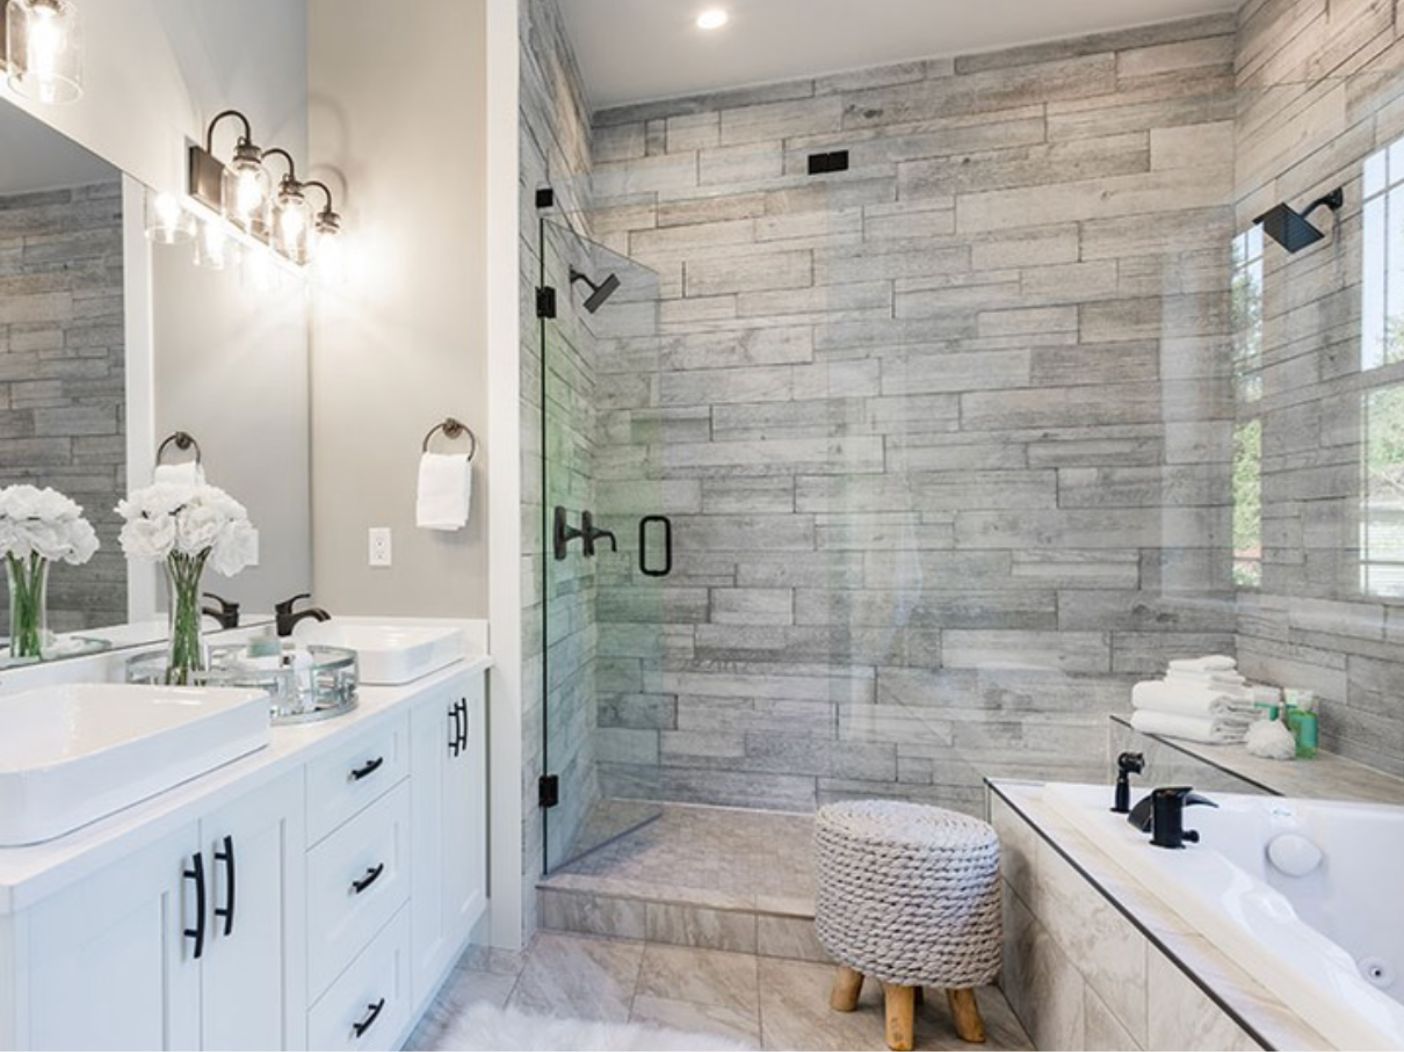 15 Spa-Worthy Bathroom Ideas To Inspire Your Next Renovation